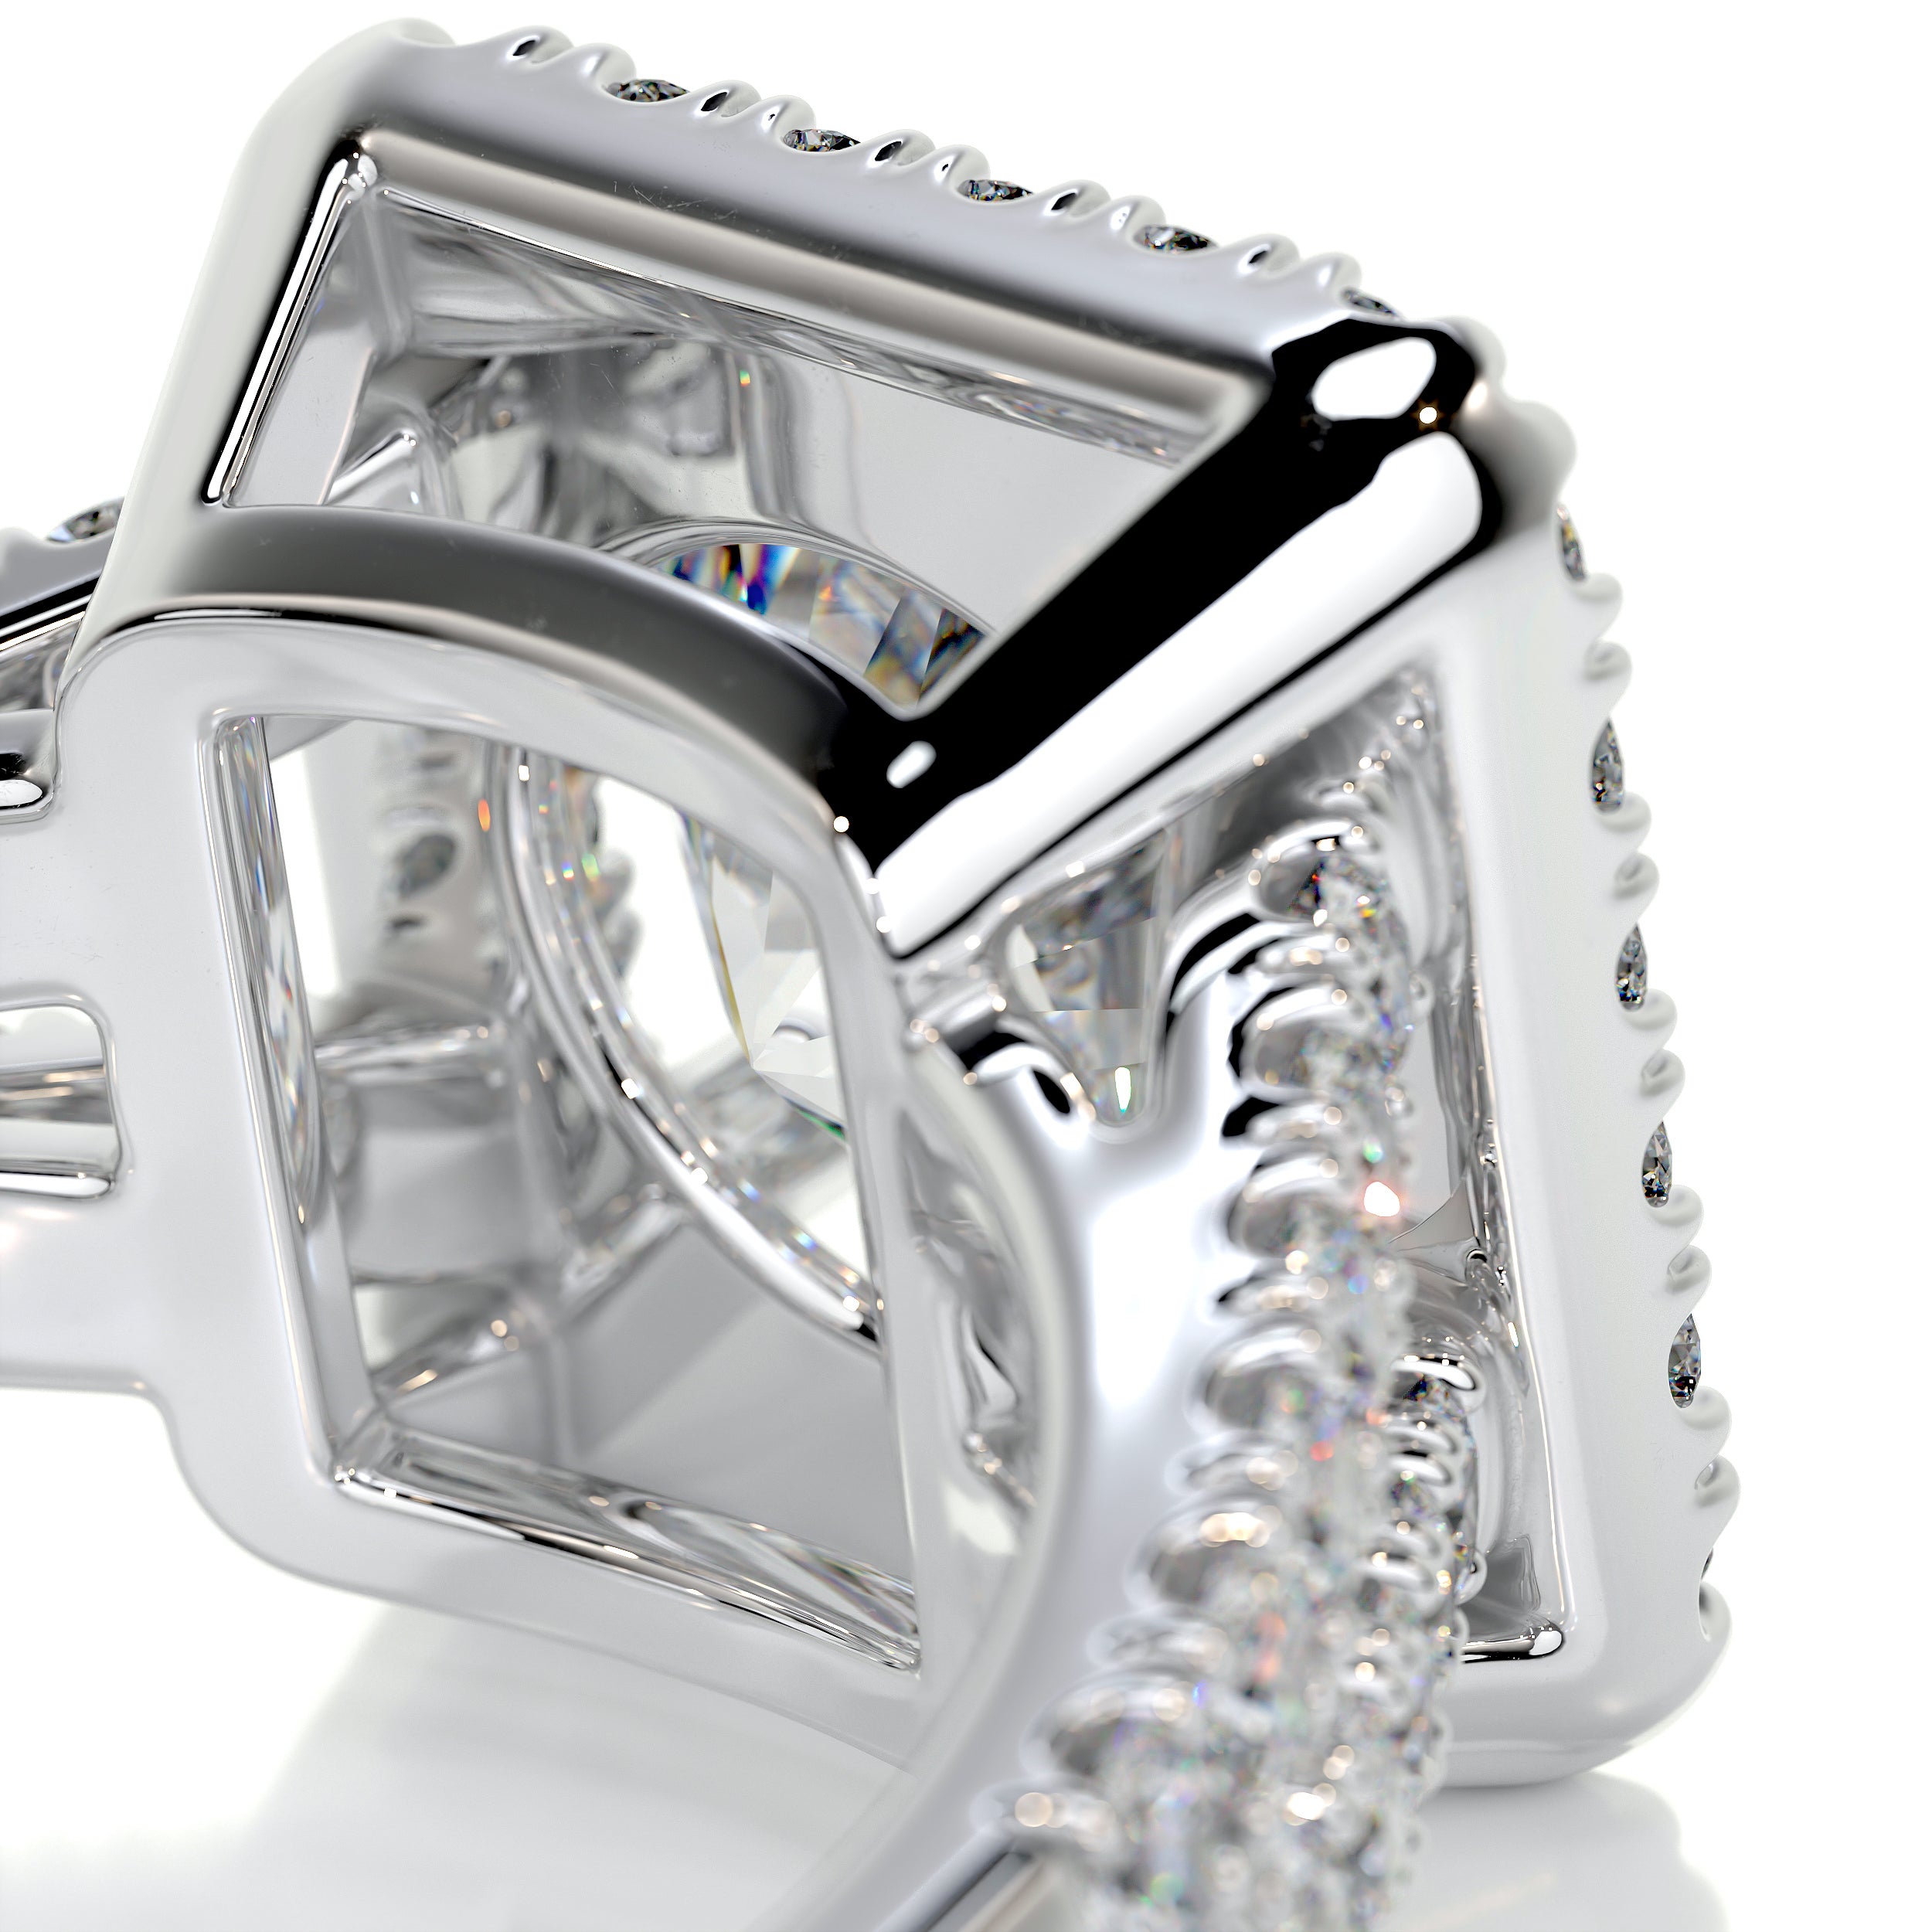 Addison Moissanite & Diamonds Ring -14K White Gold